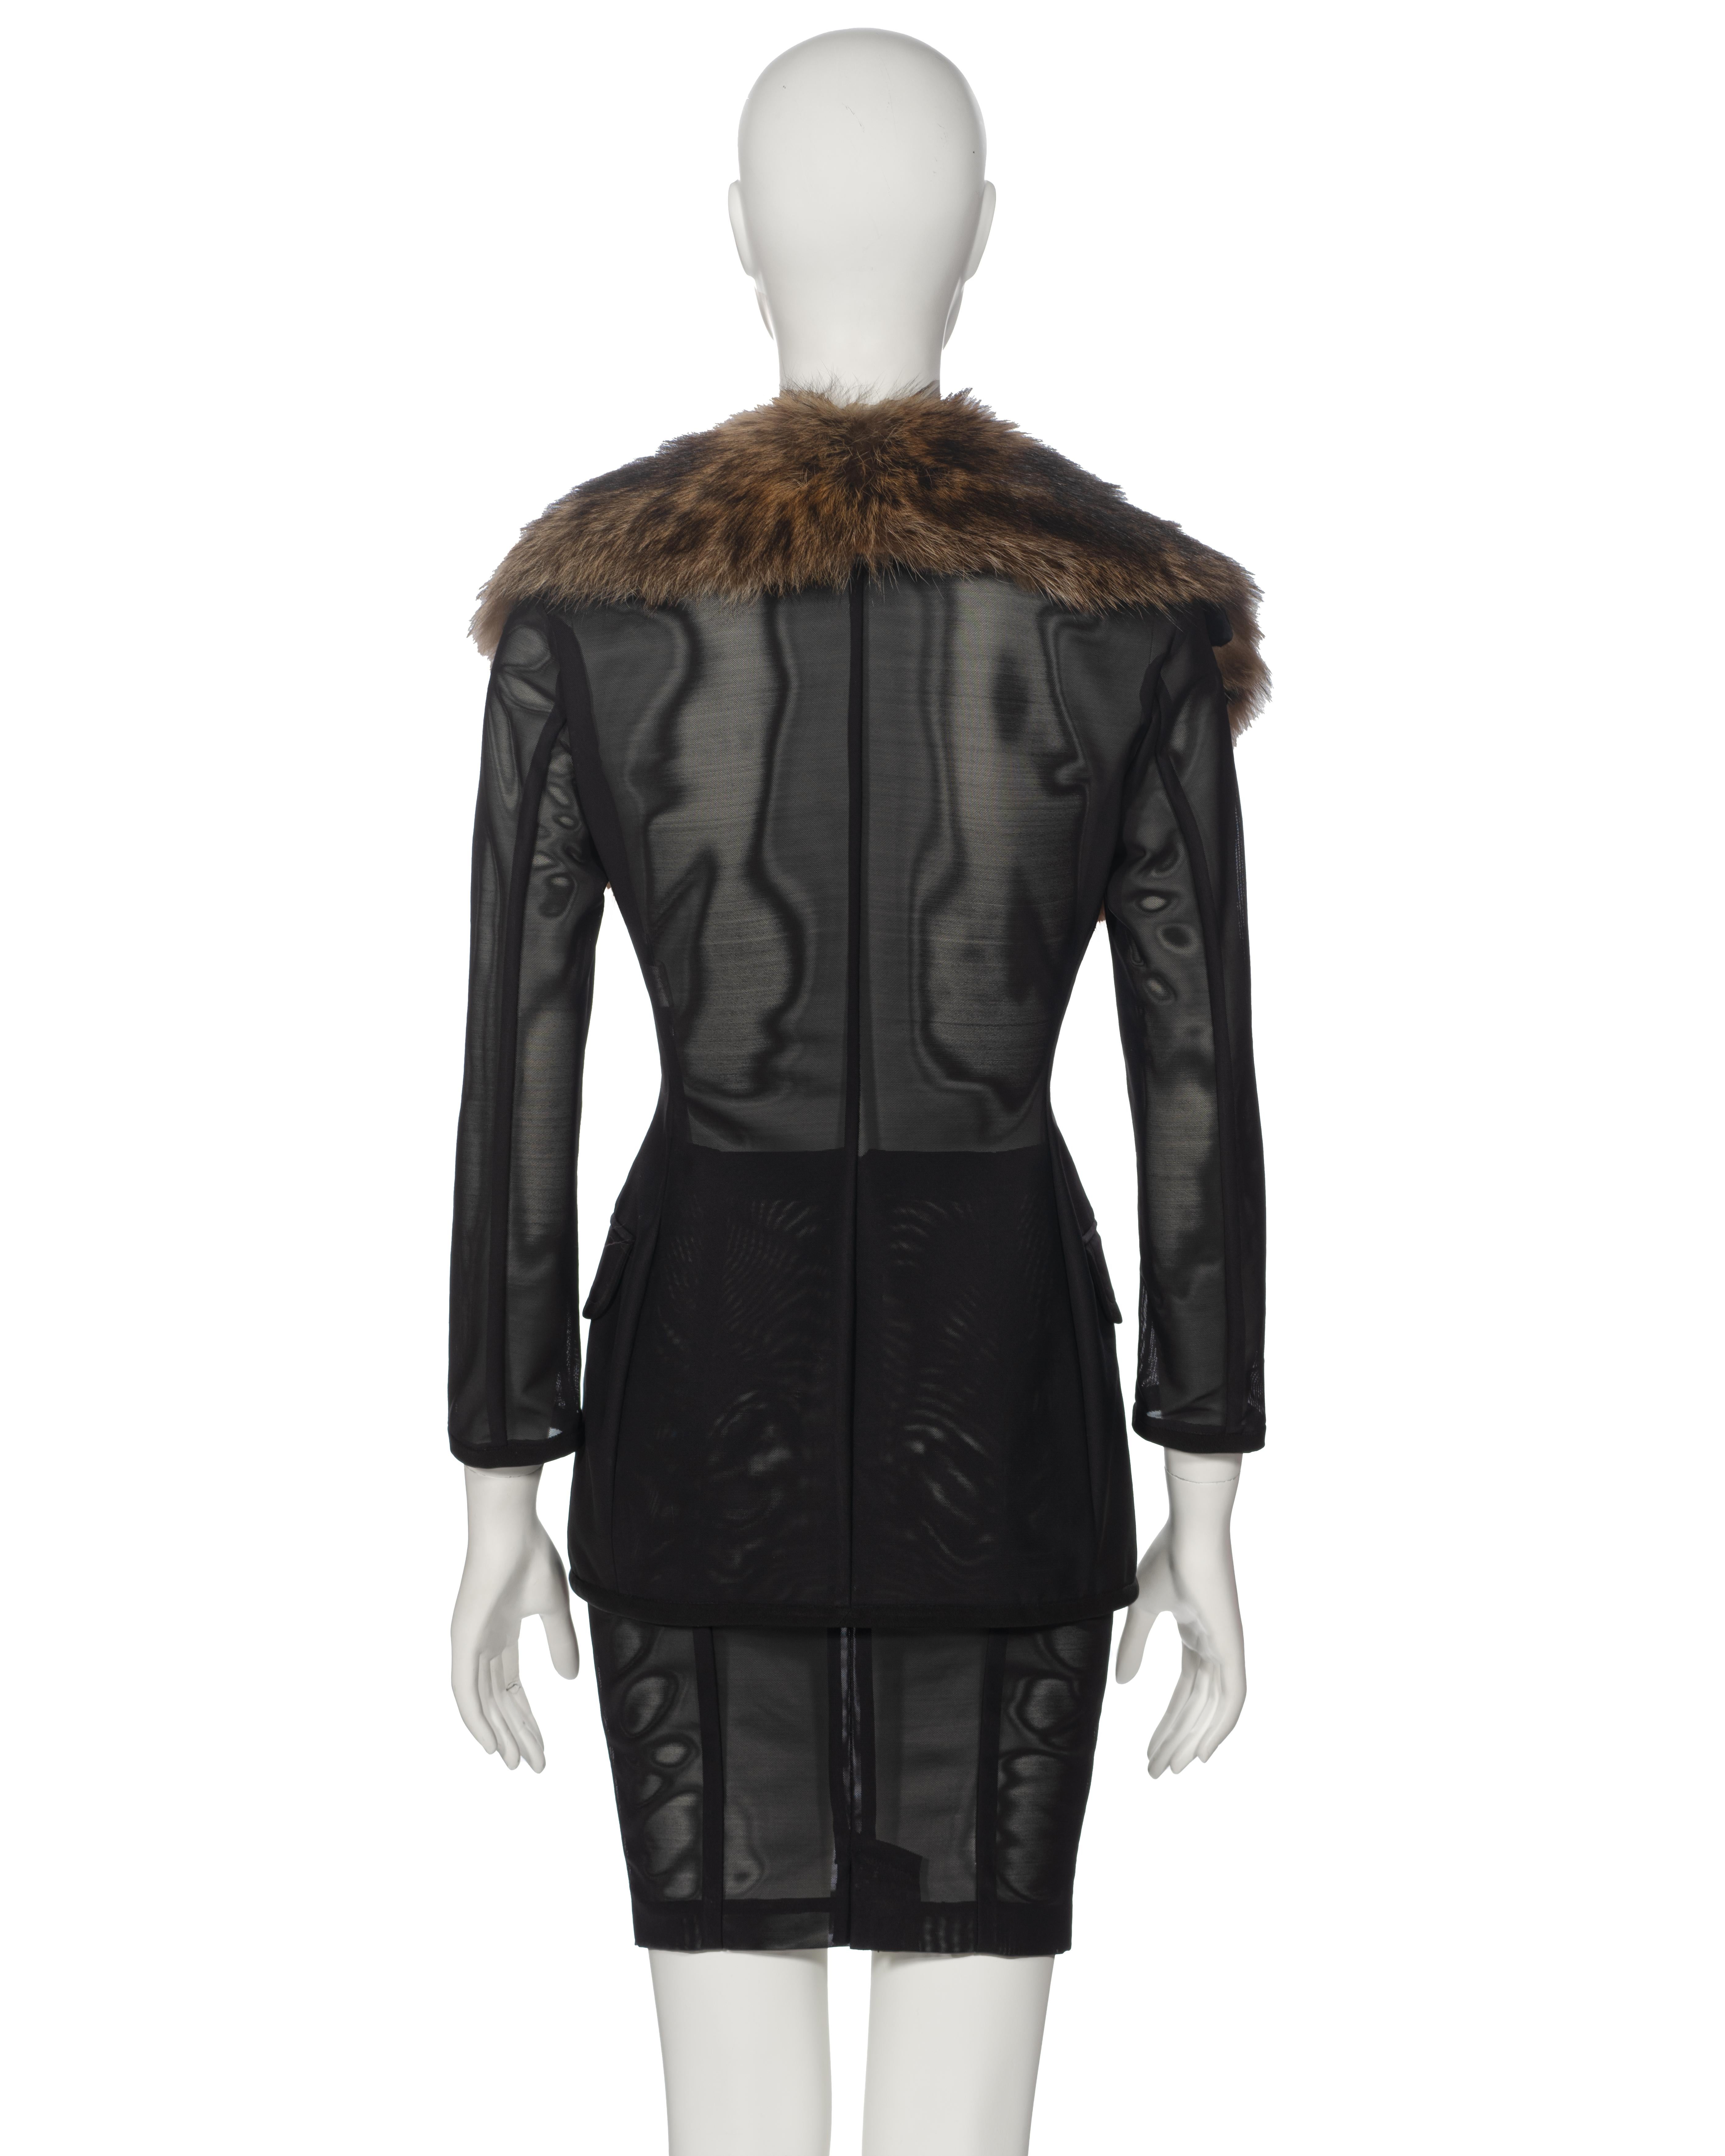 Dolce & Gabbana Black Power Net Skirt Suit with Fur Collar, fw 1995 7